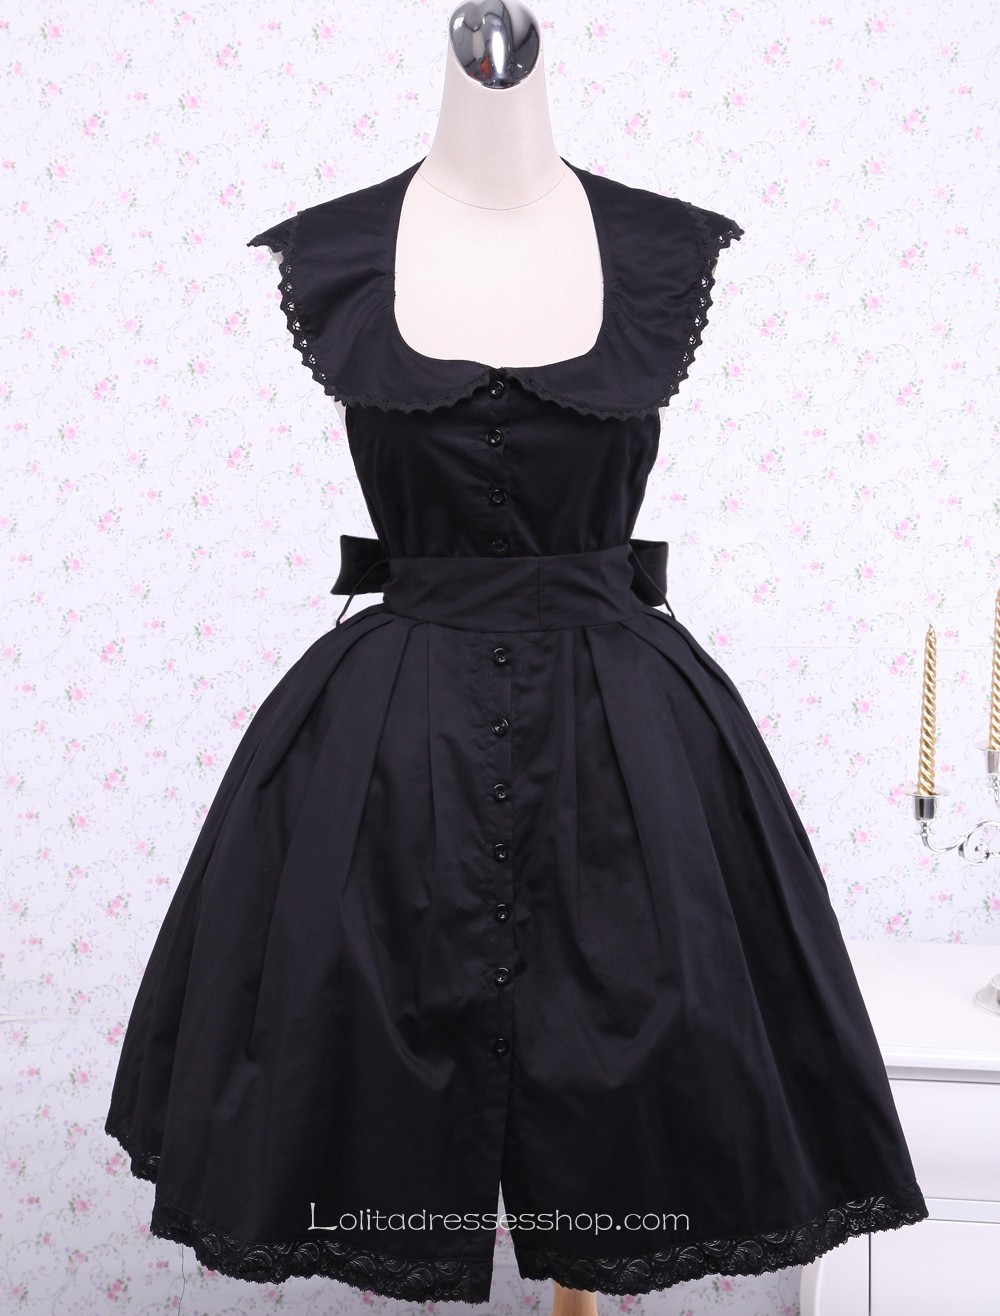 Black Cotton Round Neck Sleeveless Gothic Lolita Dress